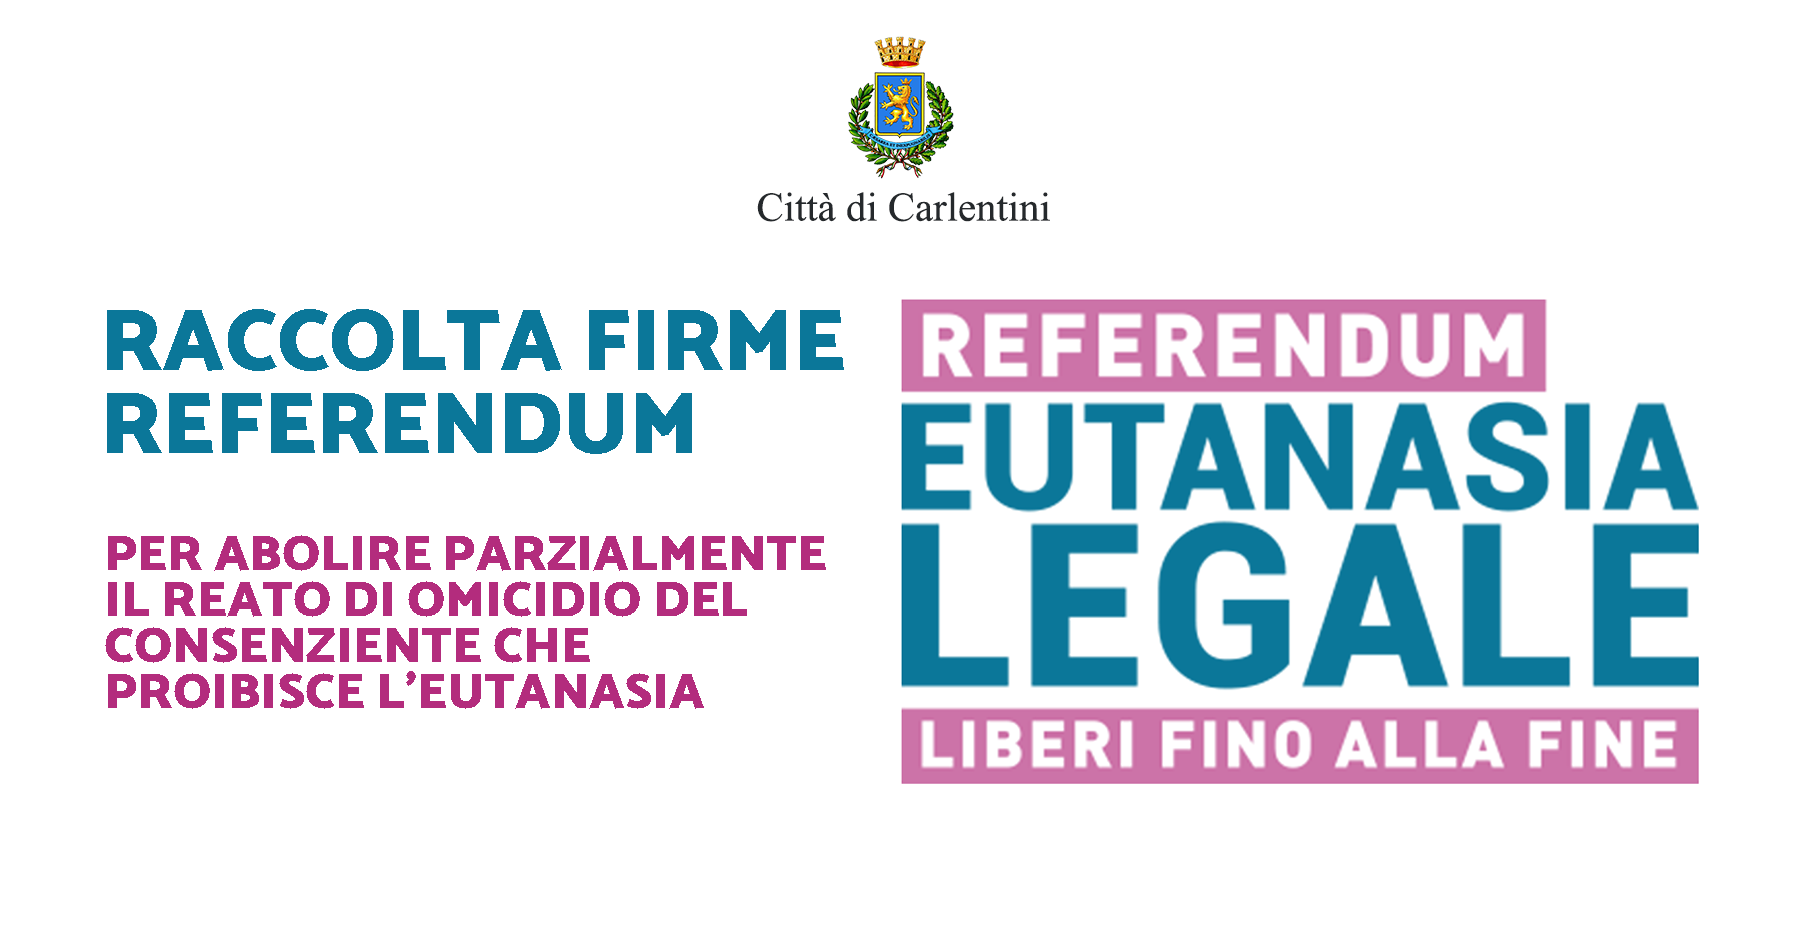 Eutanasia legale: Raccolta firme Referendum